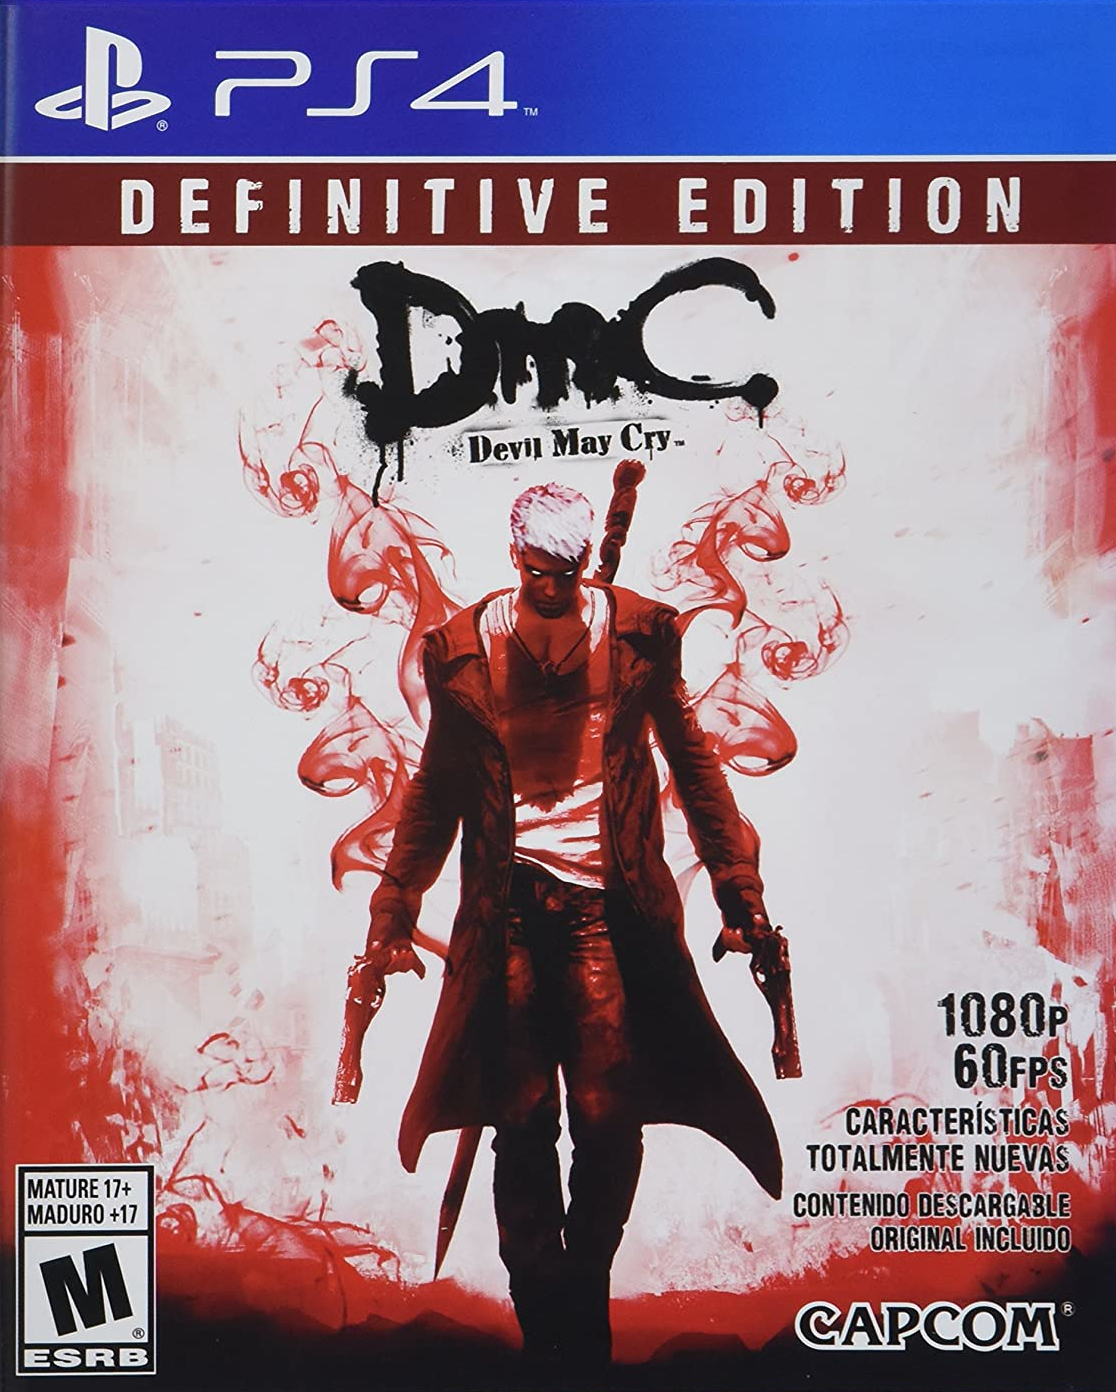 DmC: Devil May Cry Box Shot for PlayStation 3 - GameFAQs